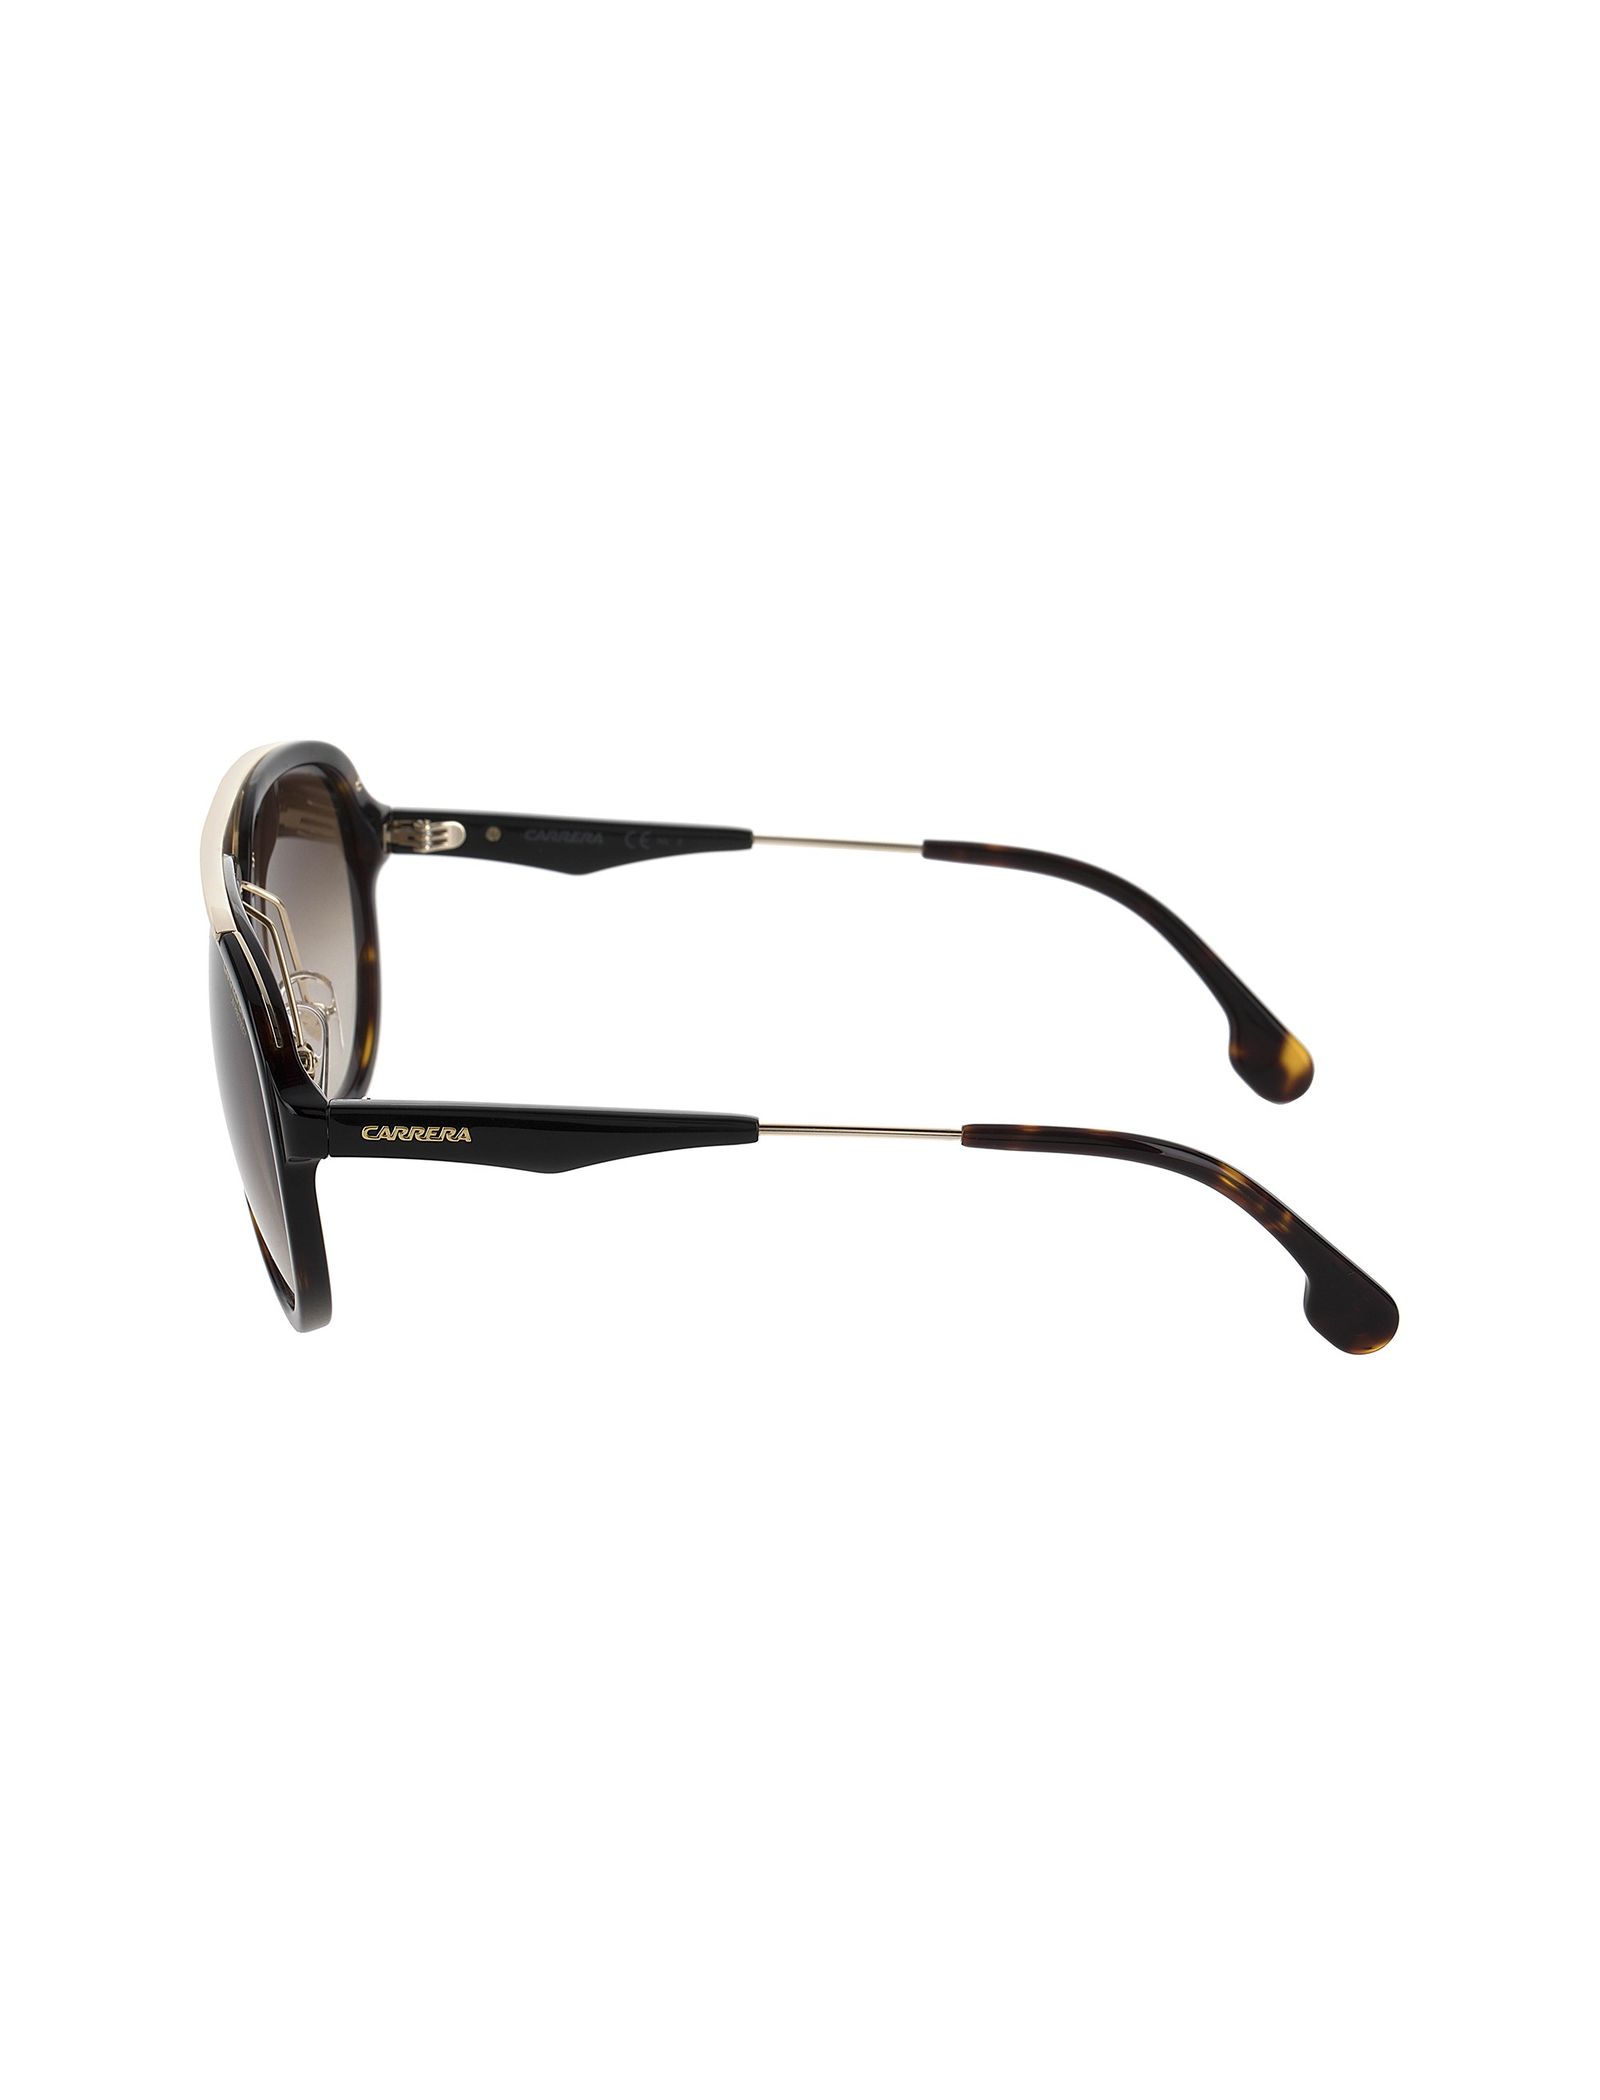 عینک آفتابی خلبانی بزرگسال - کاررا - قهوه اي لاک پشتي - 4